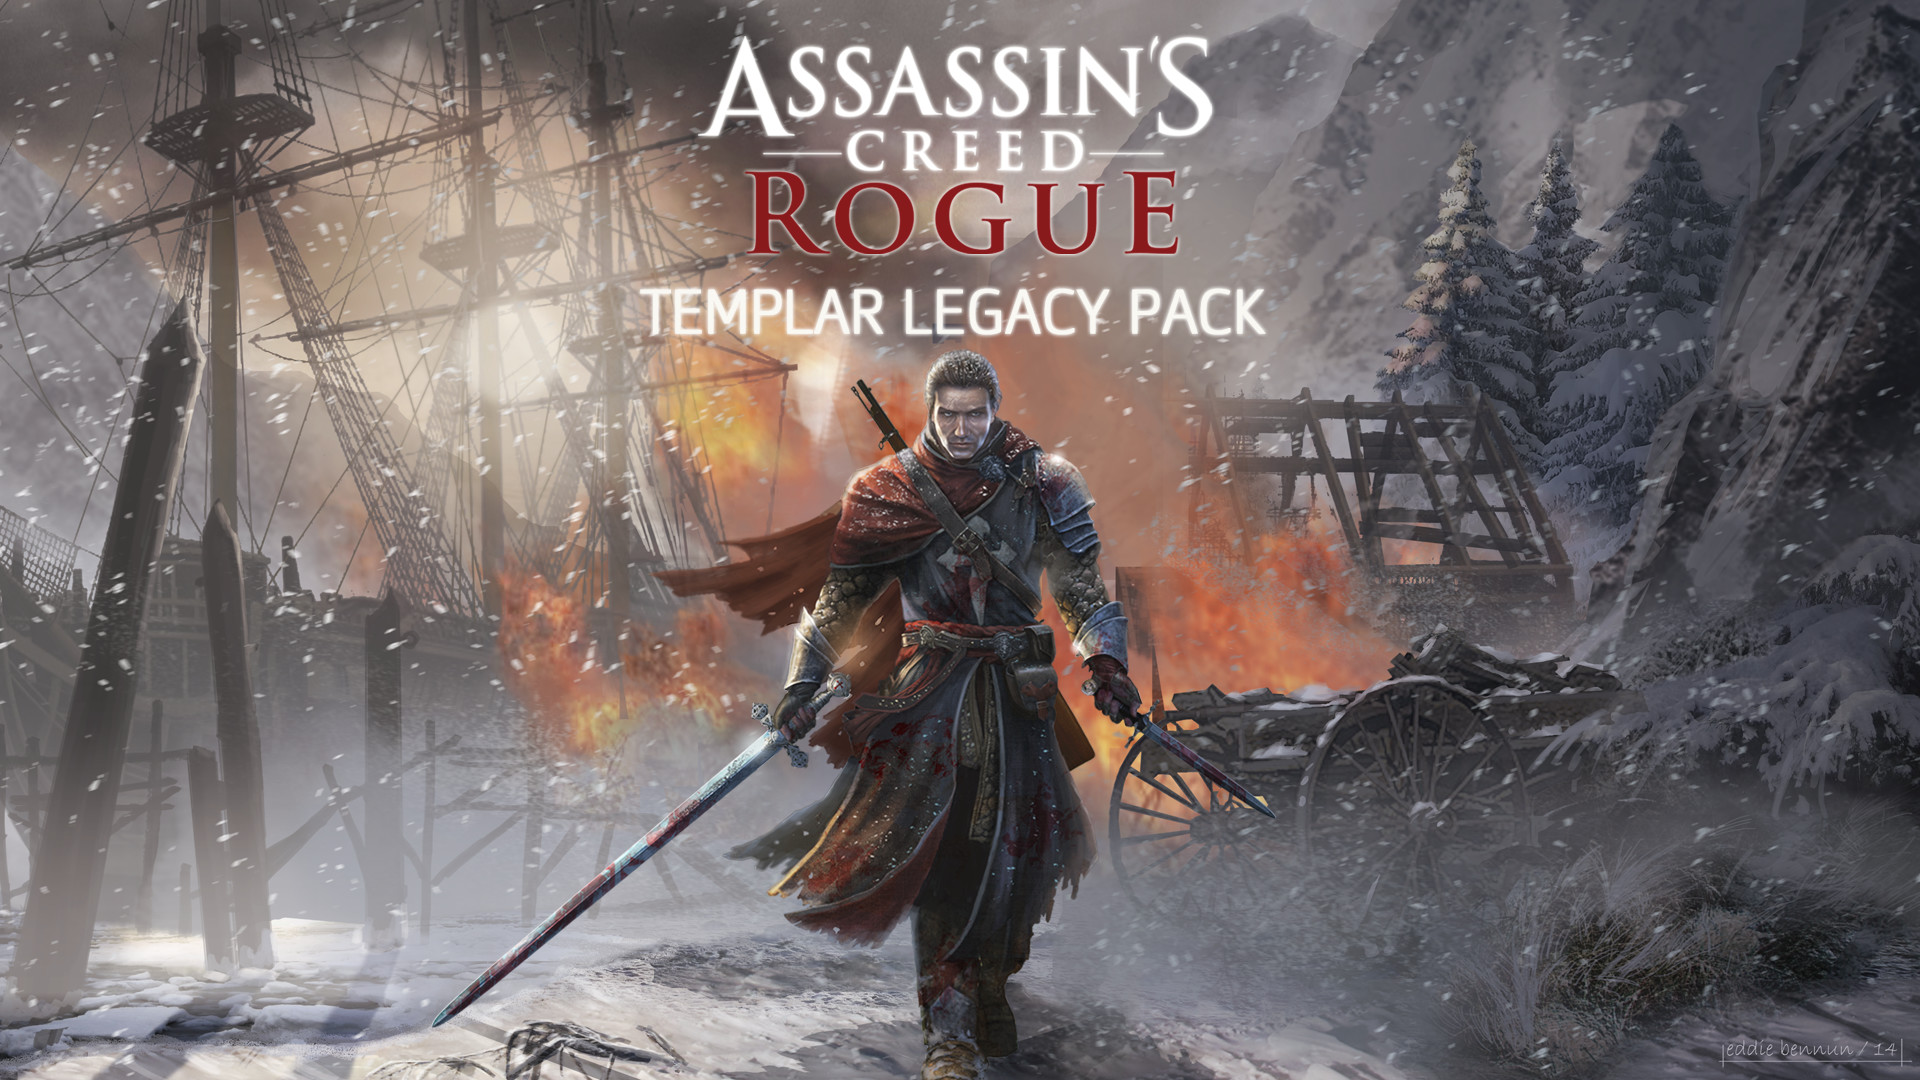 Assassin’s Creed® Rogue - Templar Legacy Pack Featured Screenshot #1